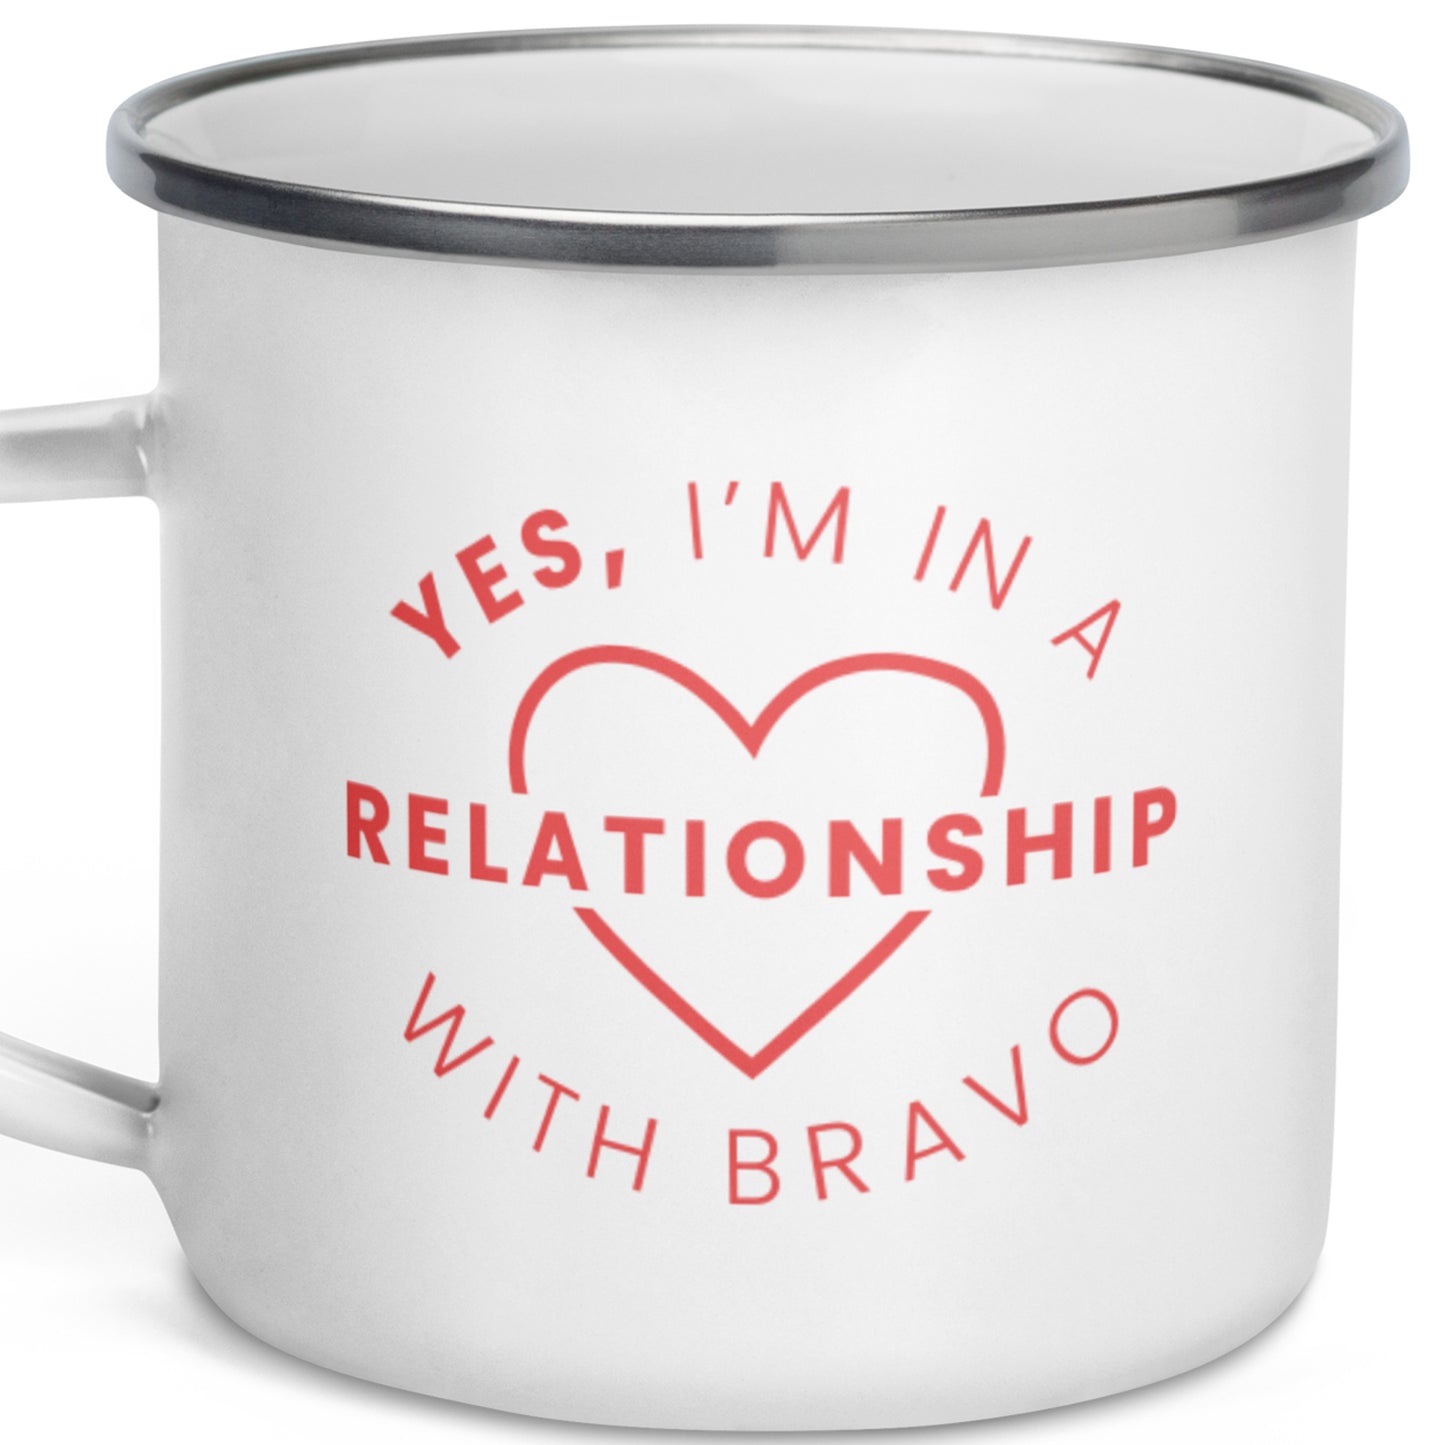 In a Relationship with Bravo Enamel Mug